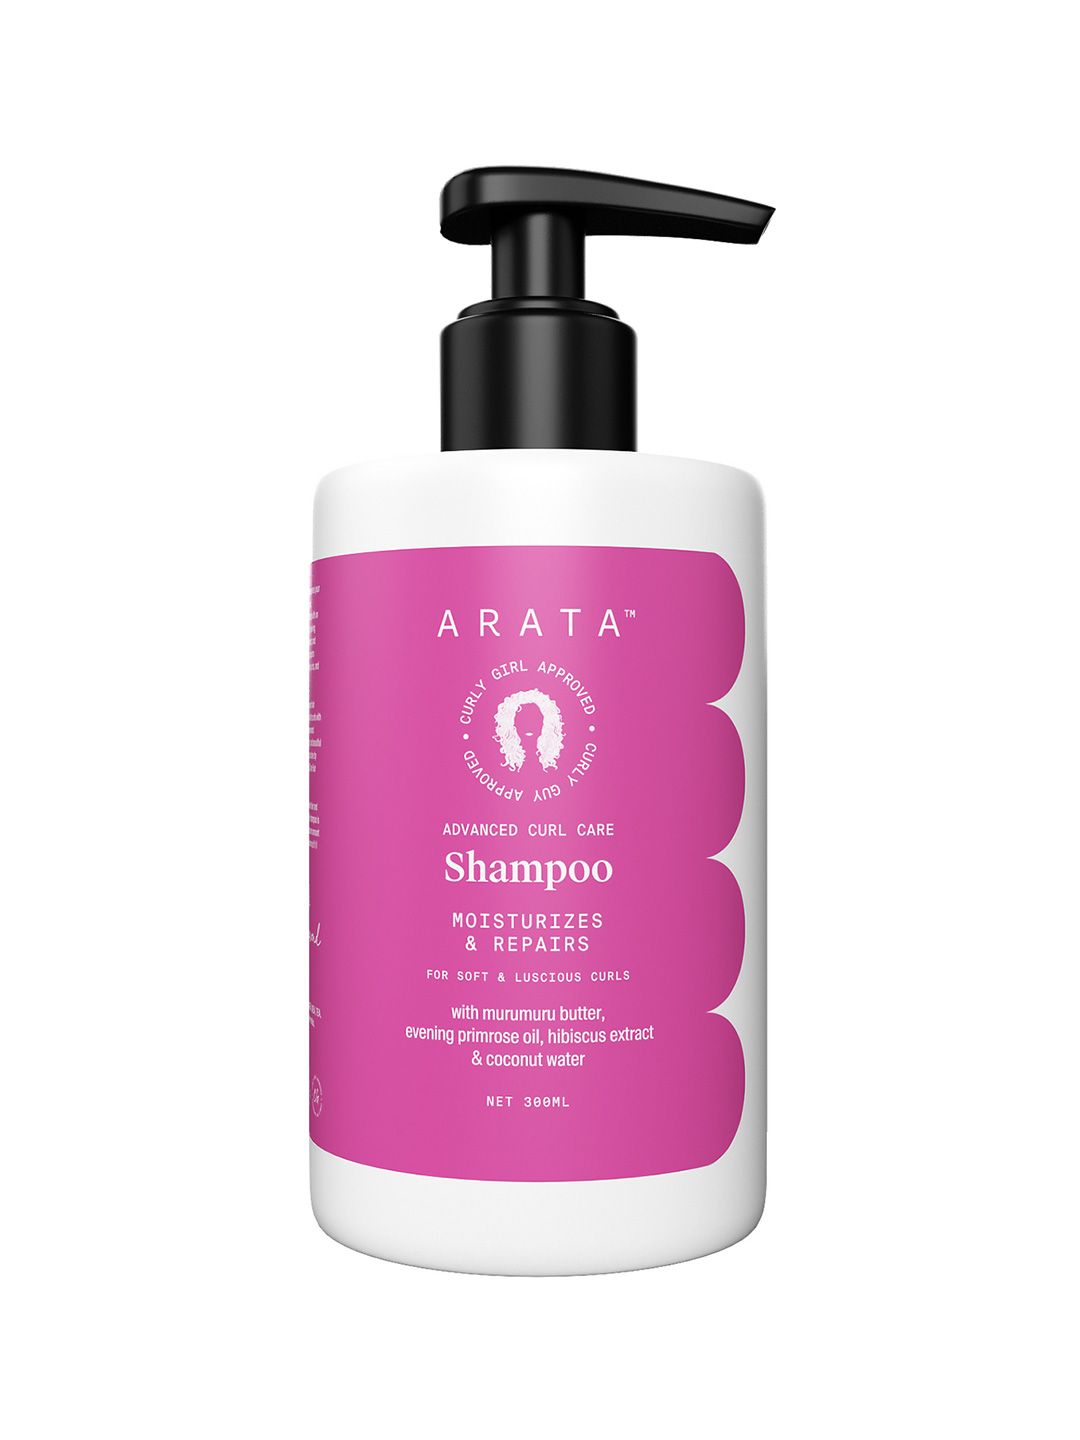 ARATA Advanced Curl Care Shampoo for Soft & Luscious Curls - 300 ml Price in India